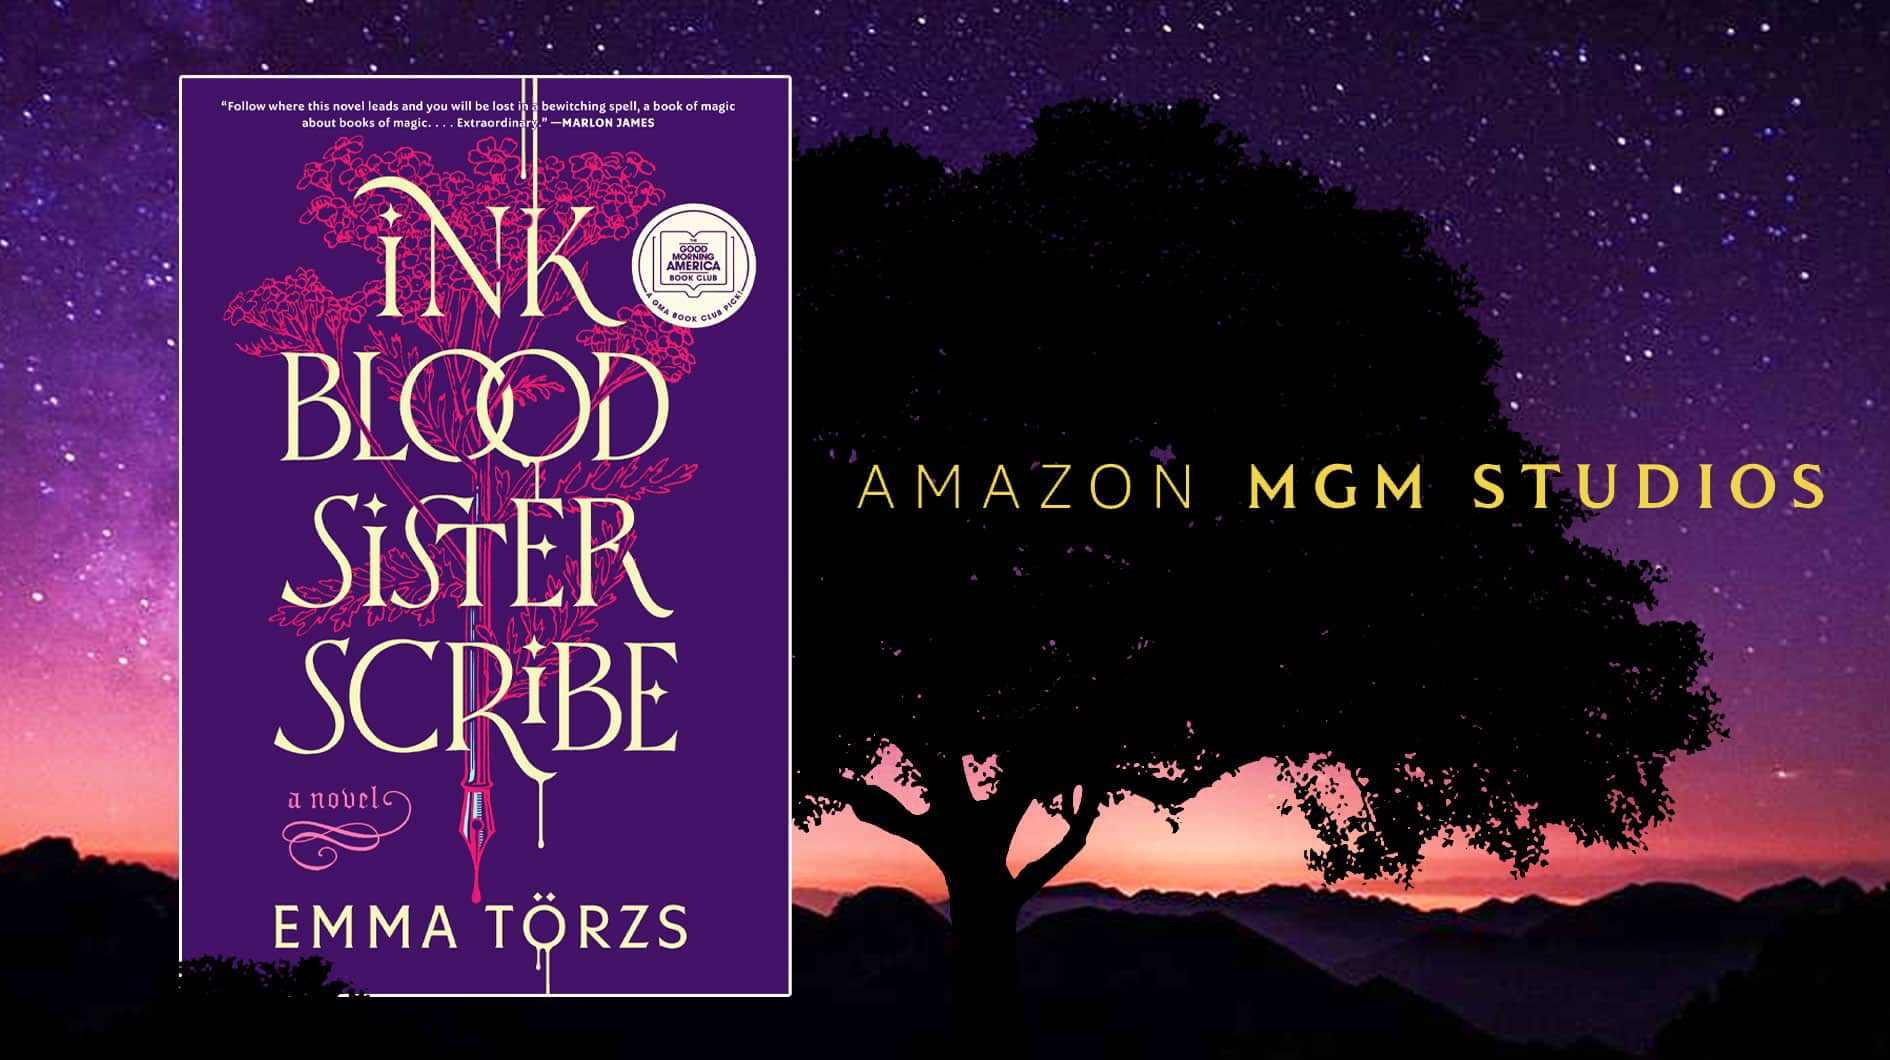 Emma Törzs’ Ink Blood Sister Scribe series at Amazon MGM